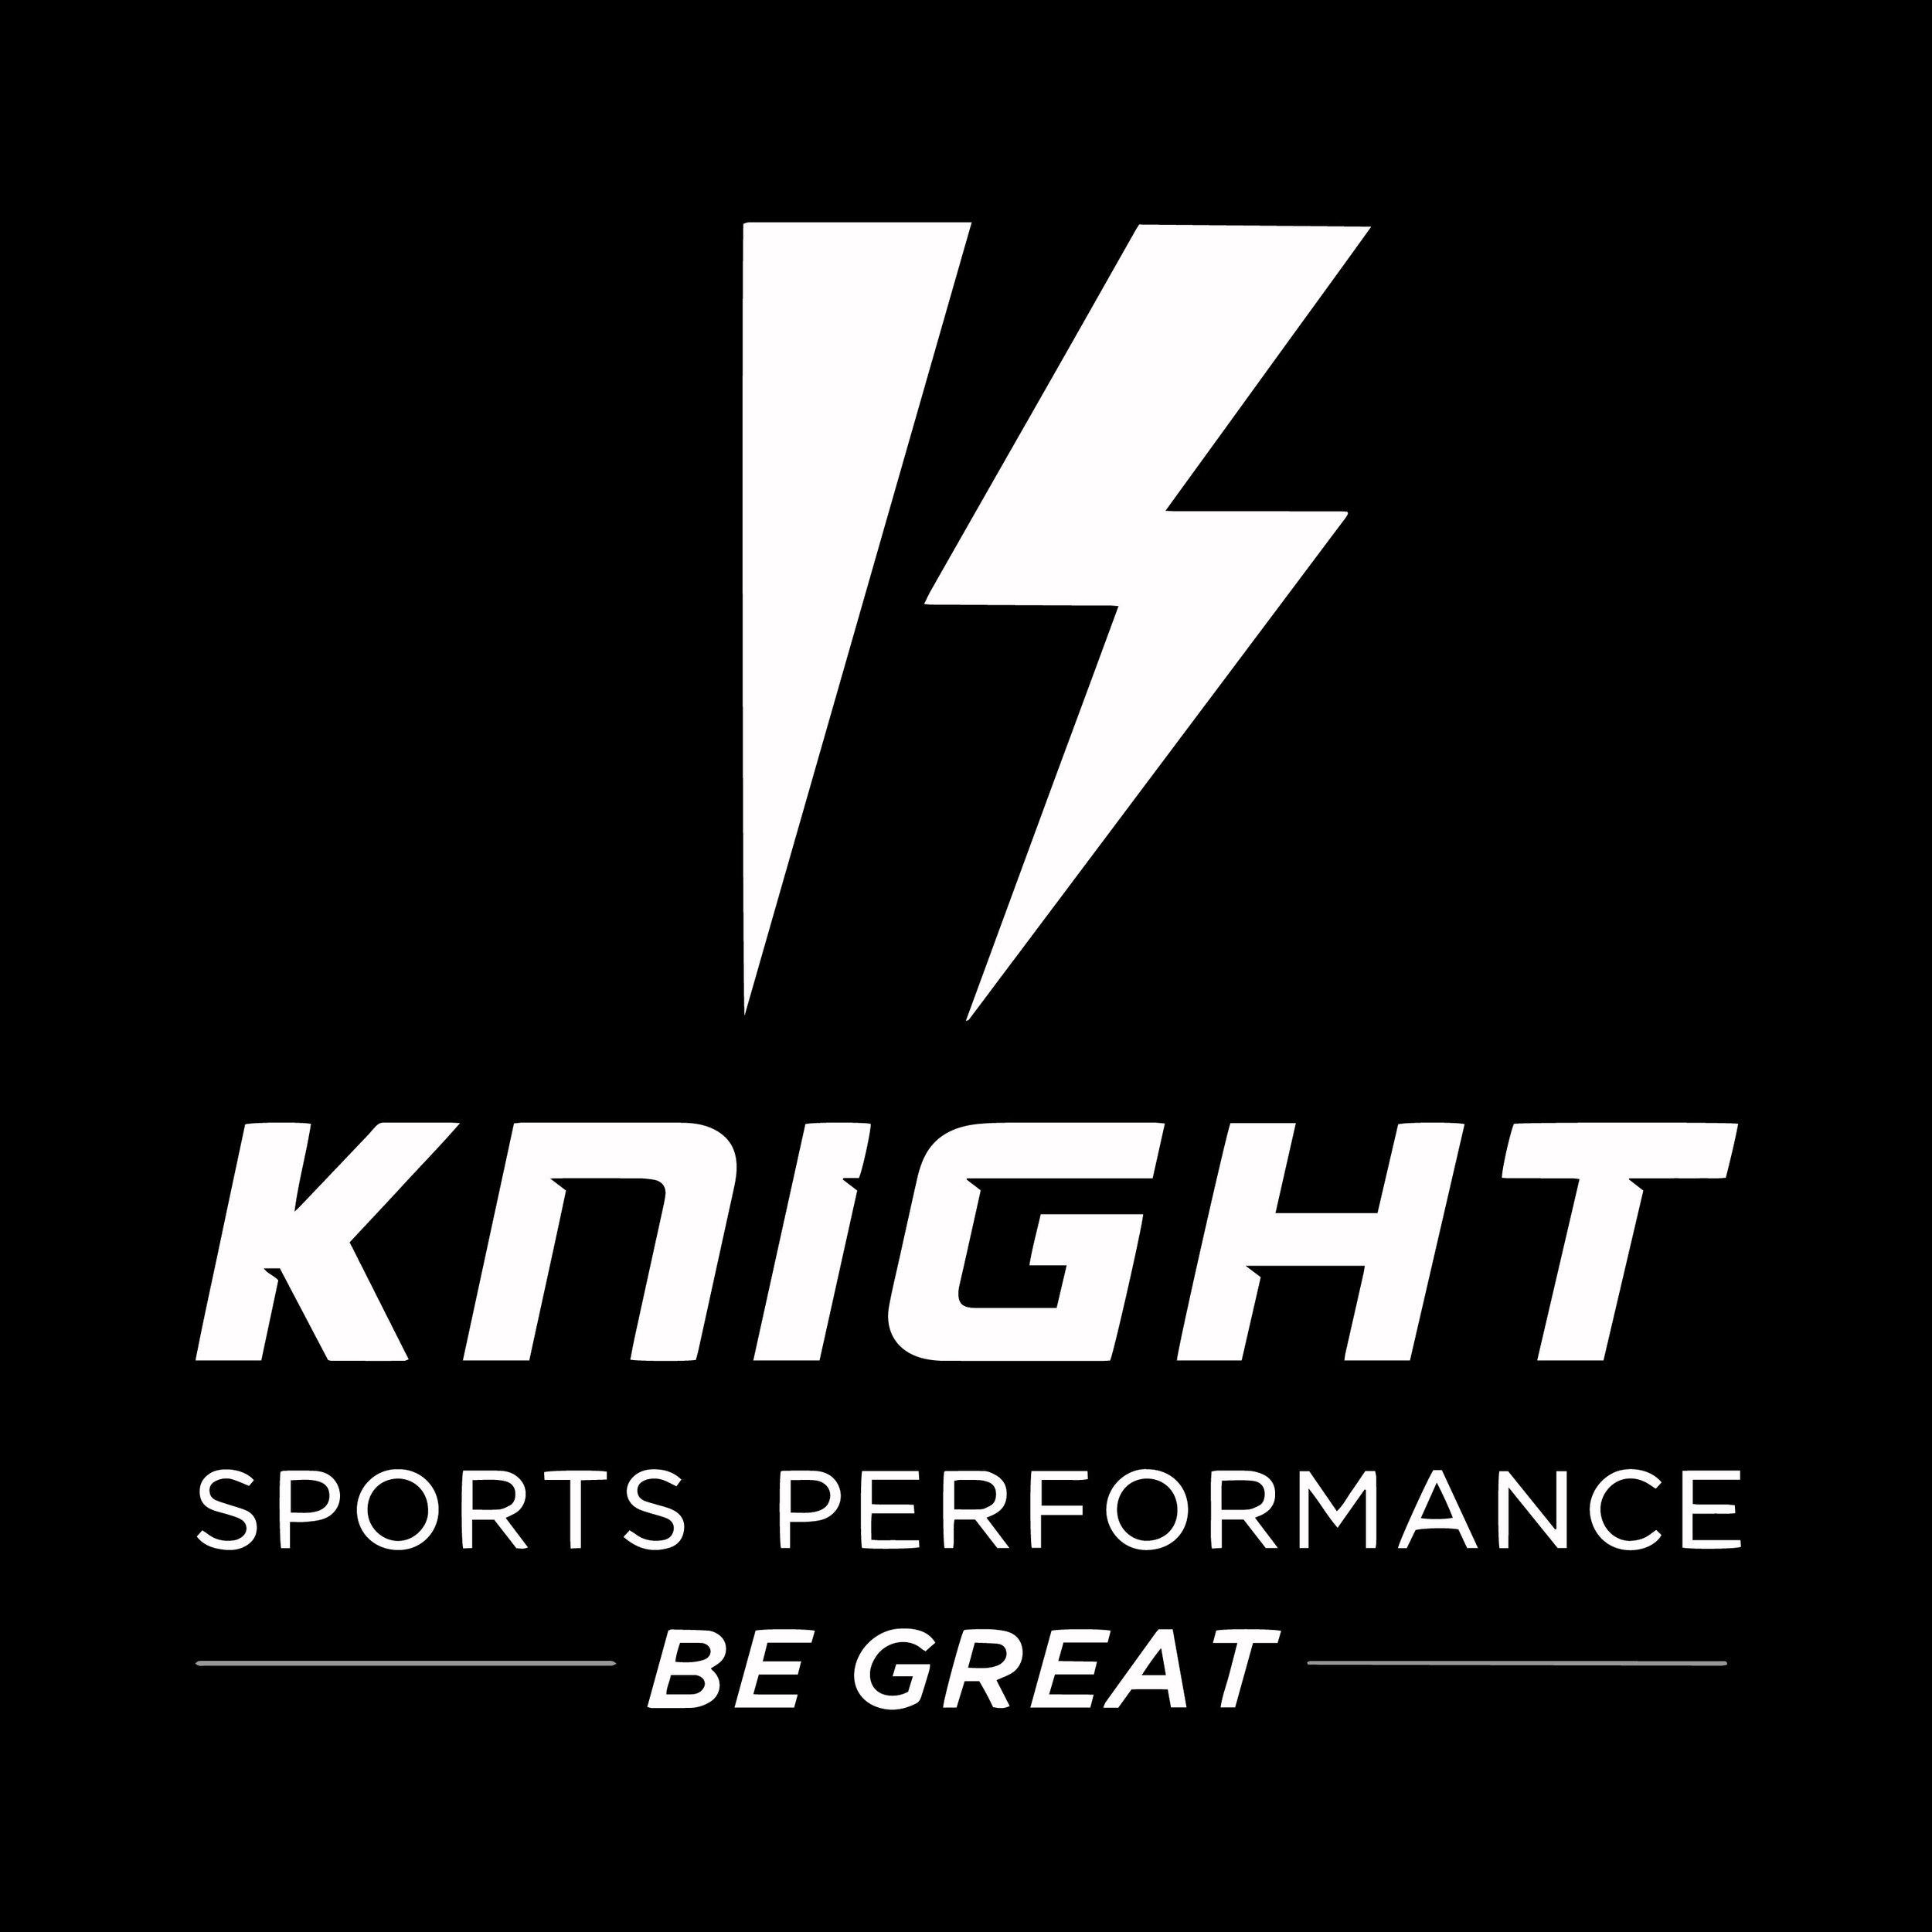 Knight Sports Performance